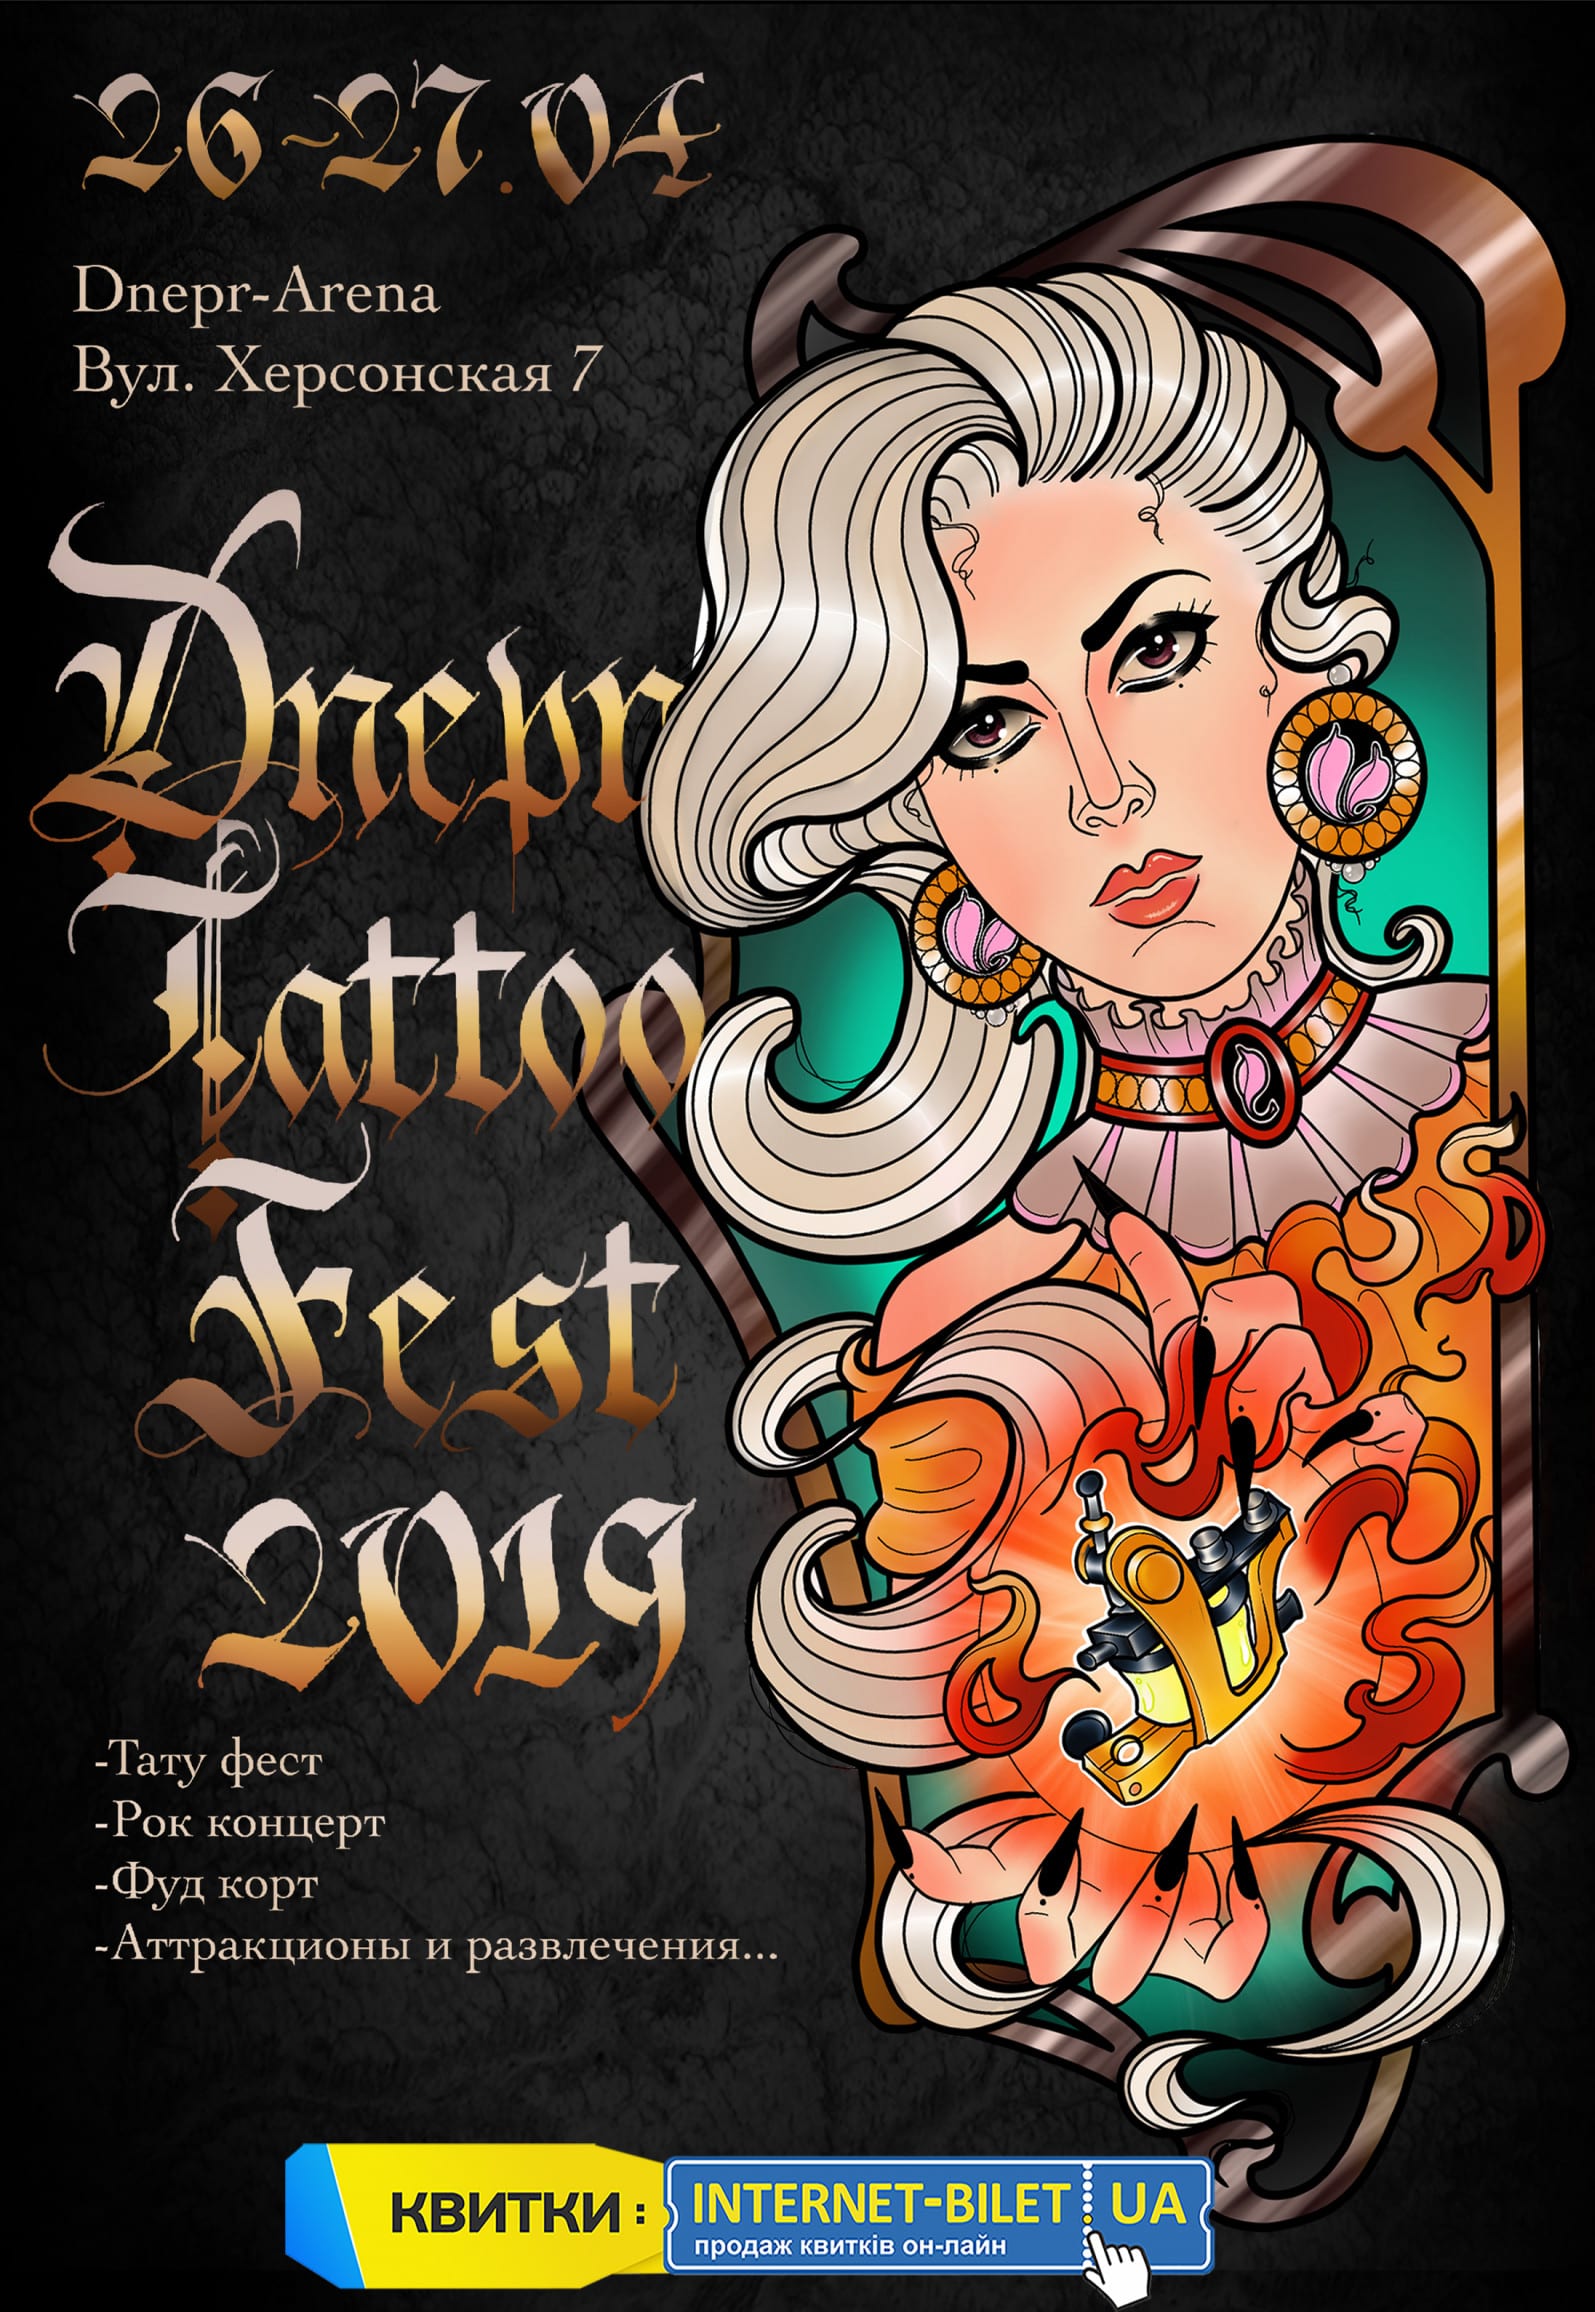 Dnepr Tattoo Fest 2019 Днепр, 27.04.2019, купить билеты, цена, дата. Афиша Днепра